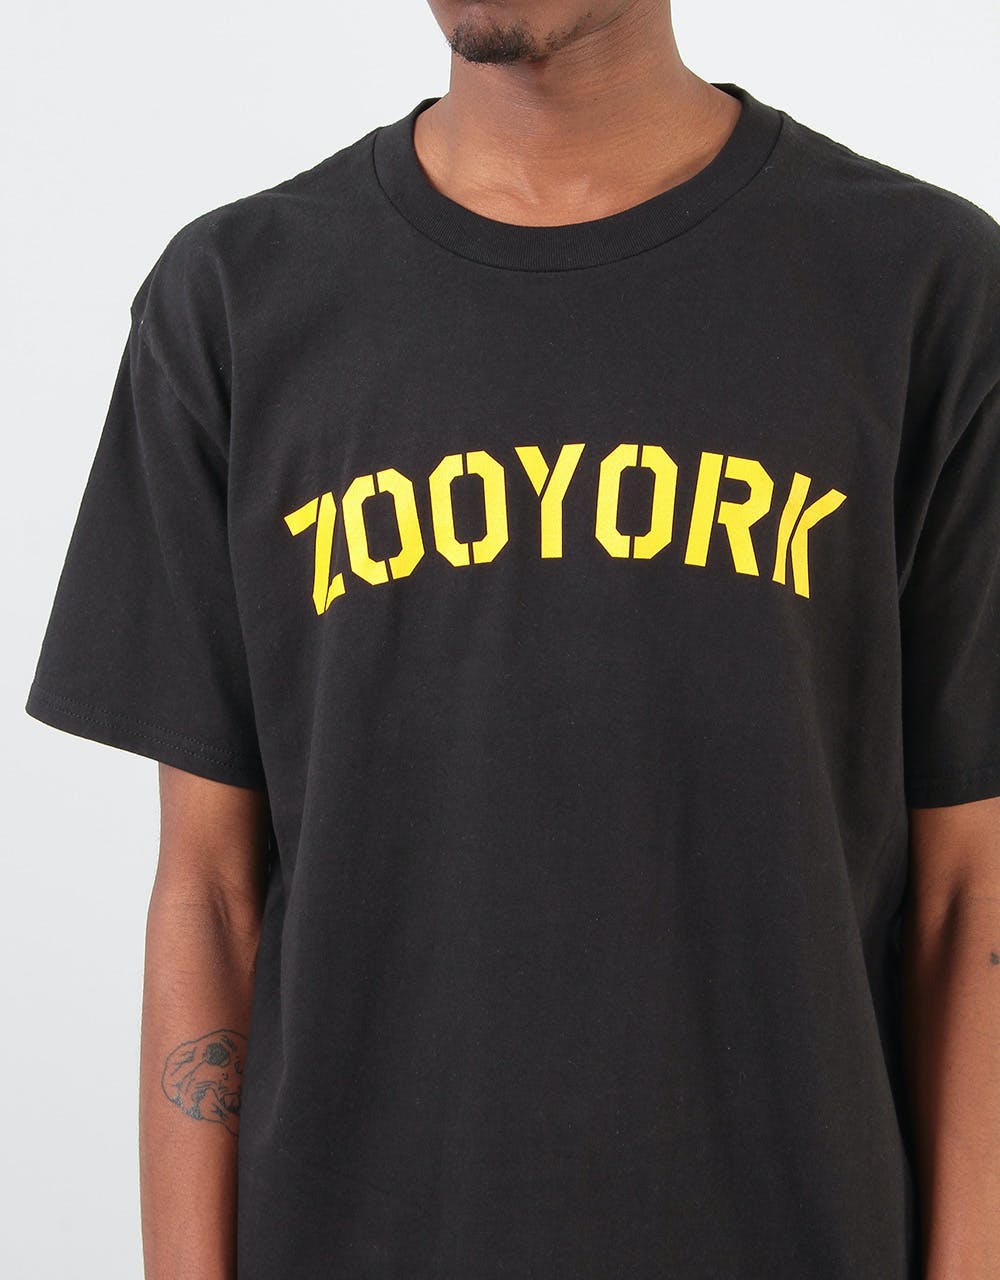 Zoo York Stencil Arch T-Shirt - Black